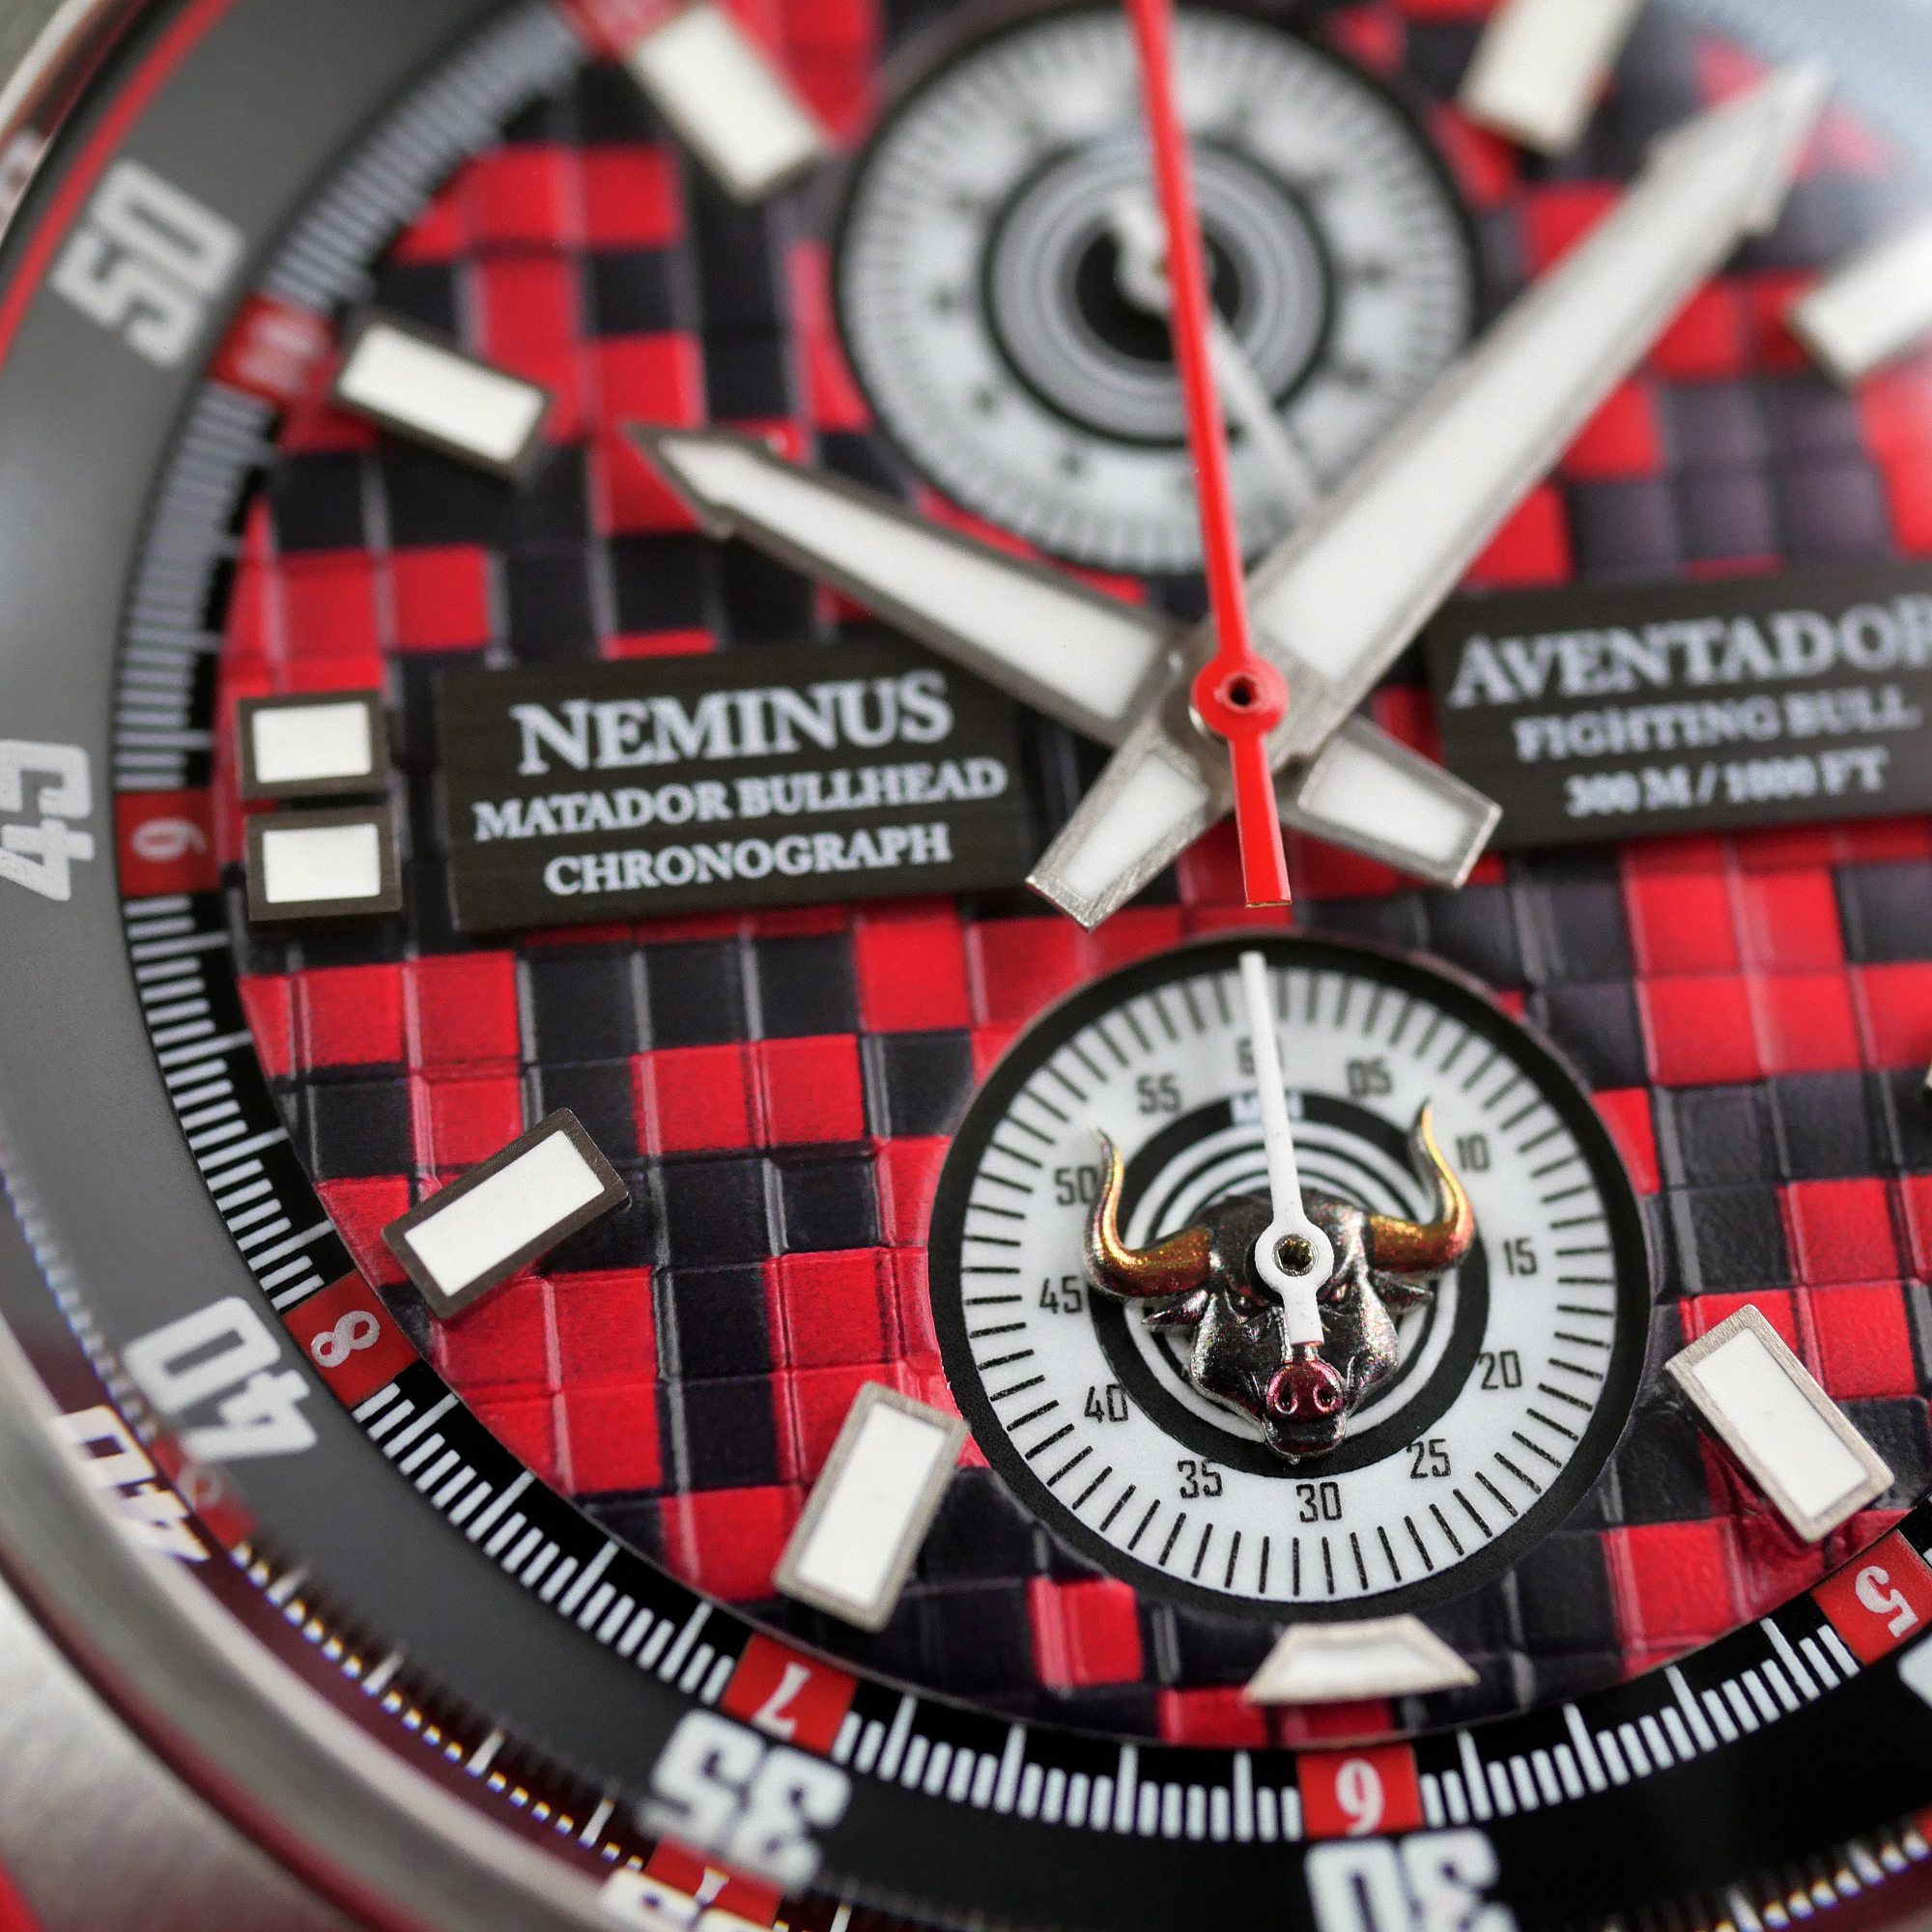 Neminus Matador Bullhead Aventador Men's Chronograph Watch